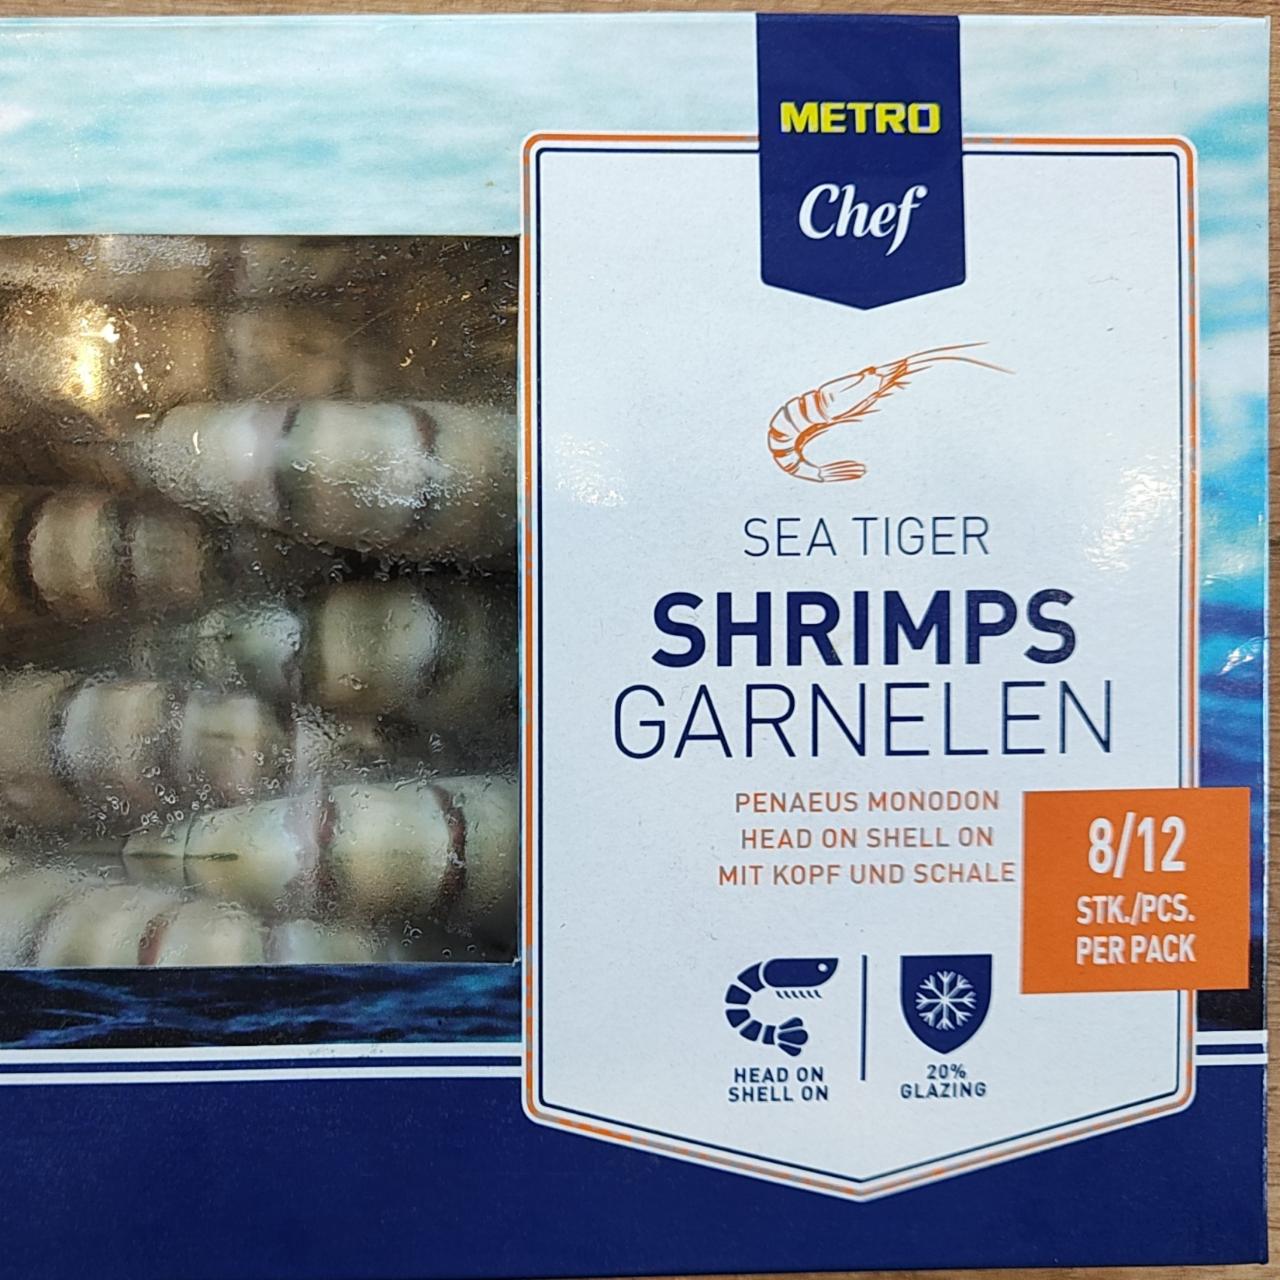 Képek - Sea Tiger Shrimps Garnelen 8/12 Metro Chef